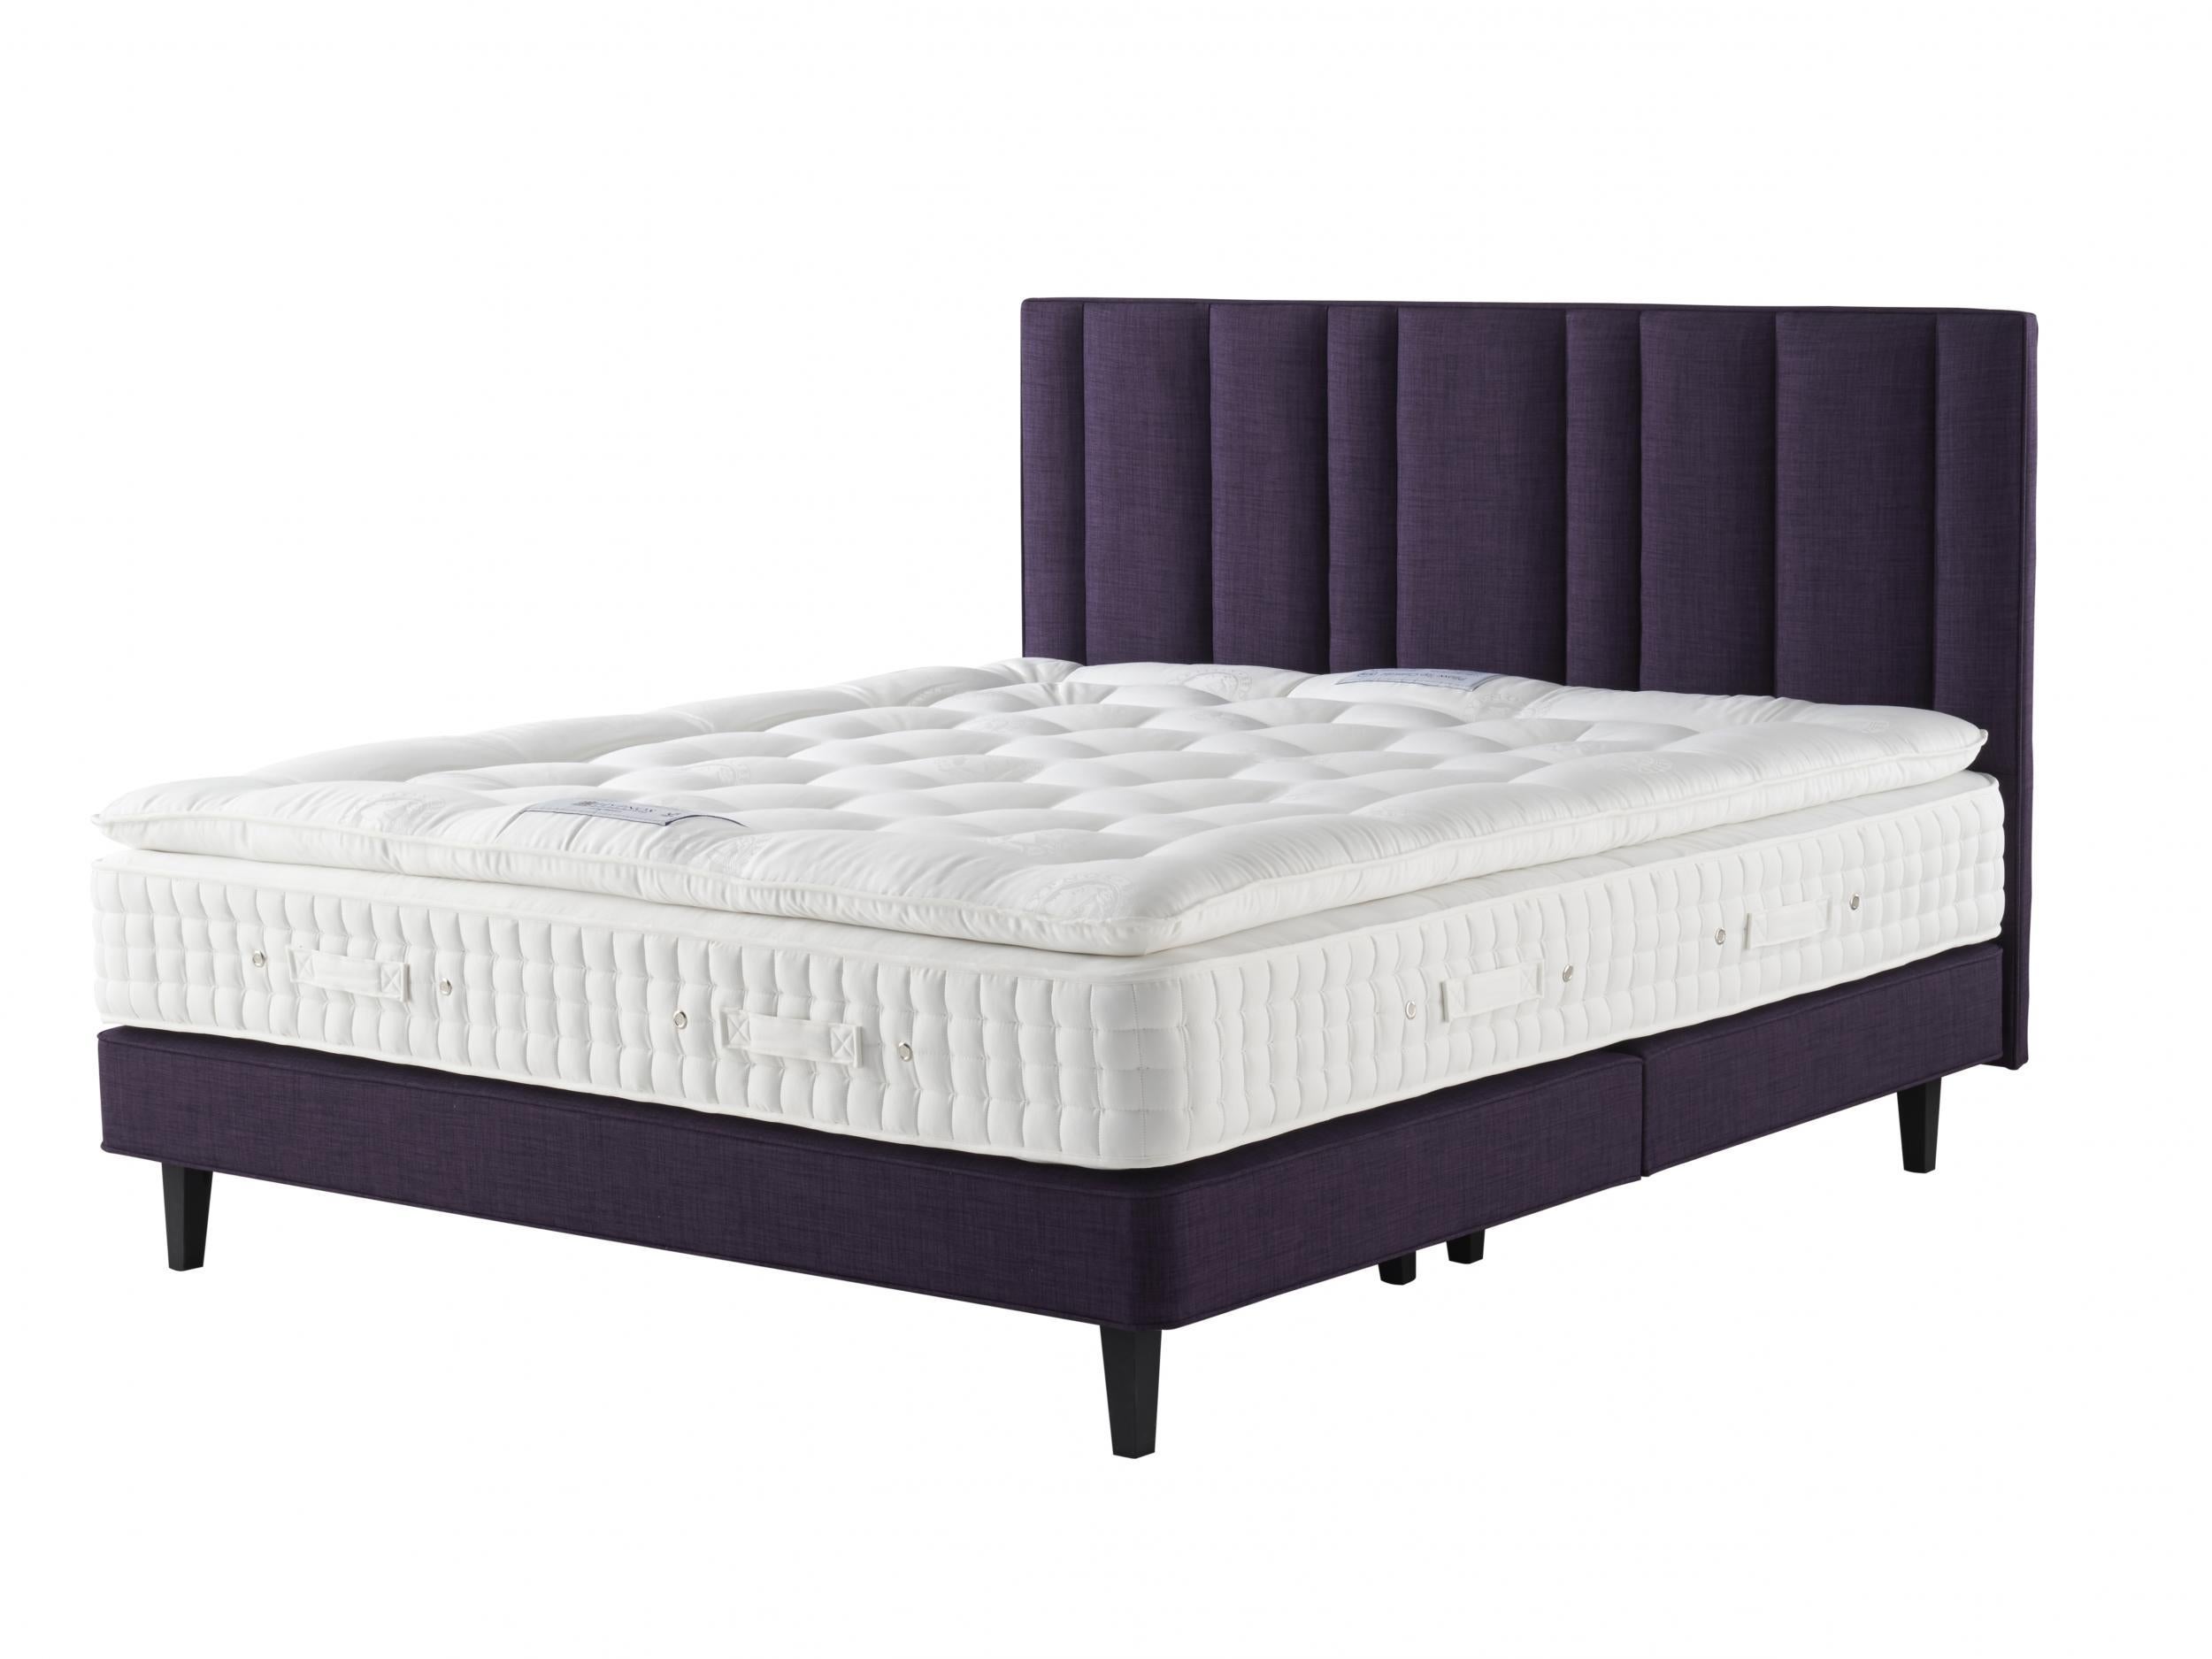 hypnos king size pillow top mattress